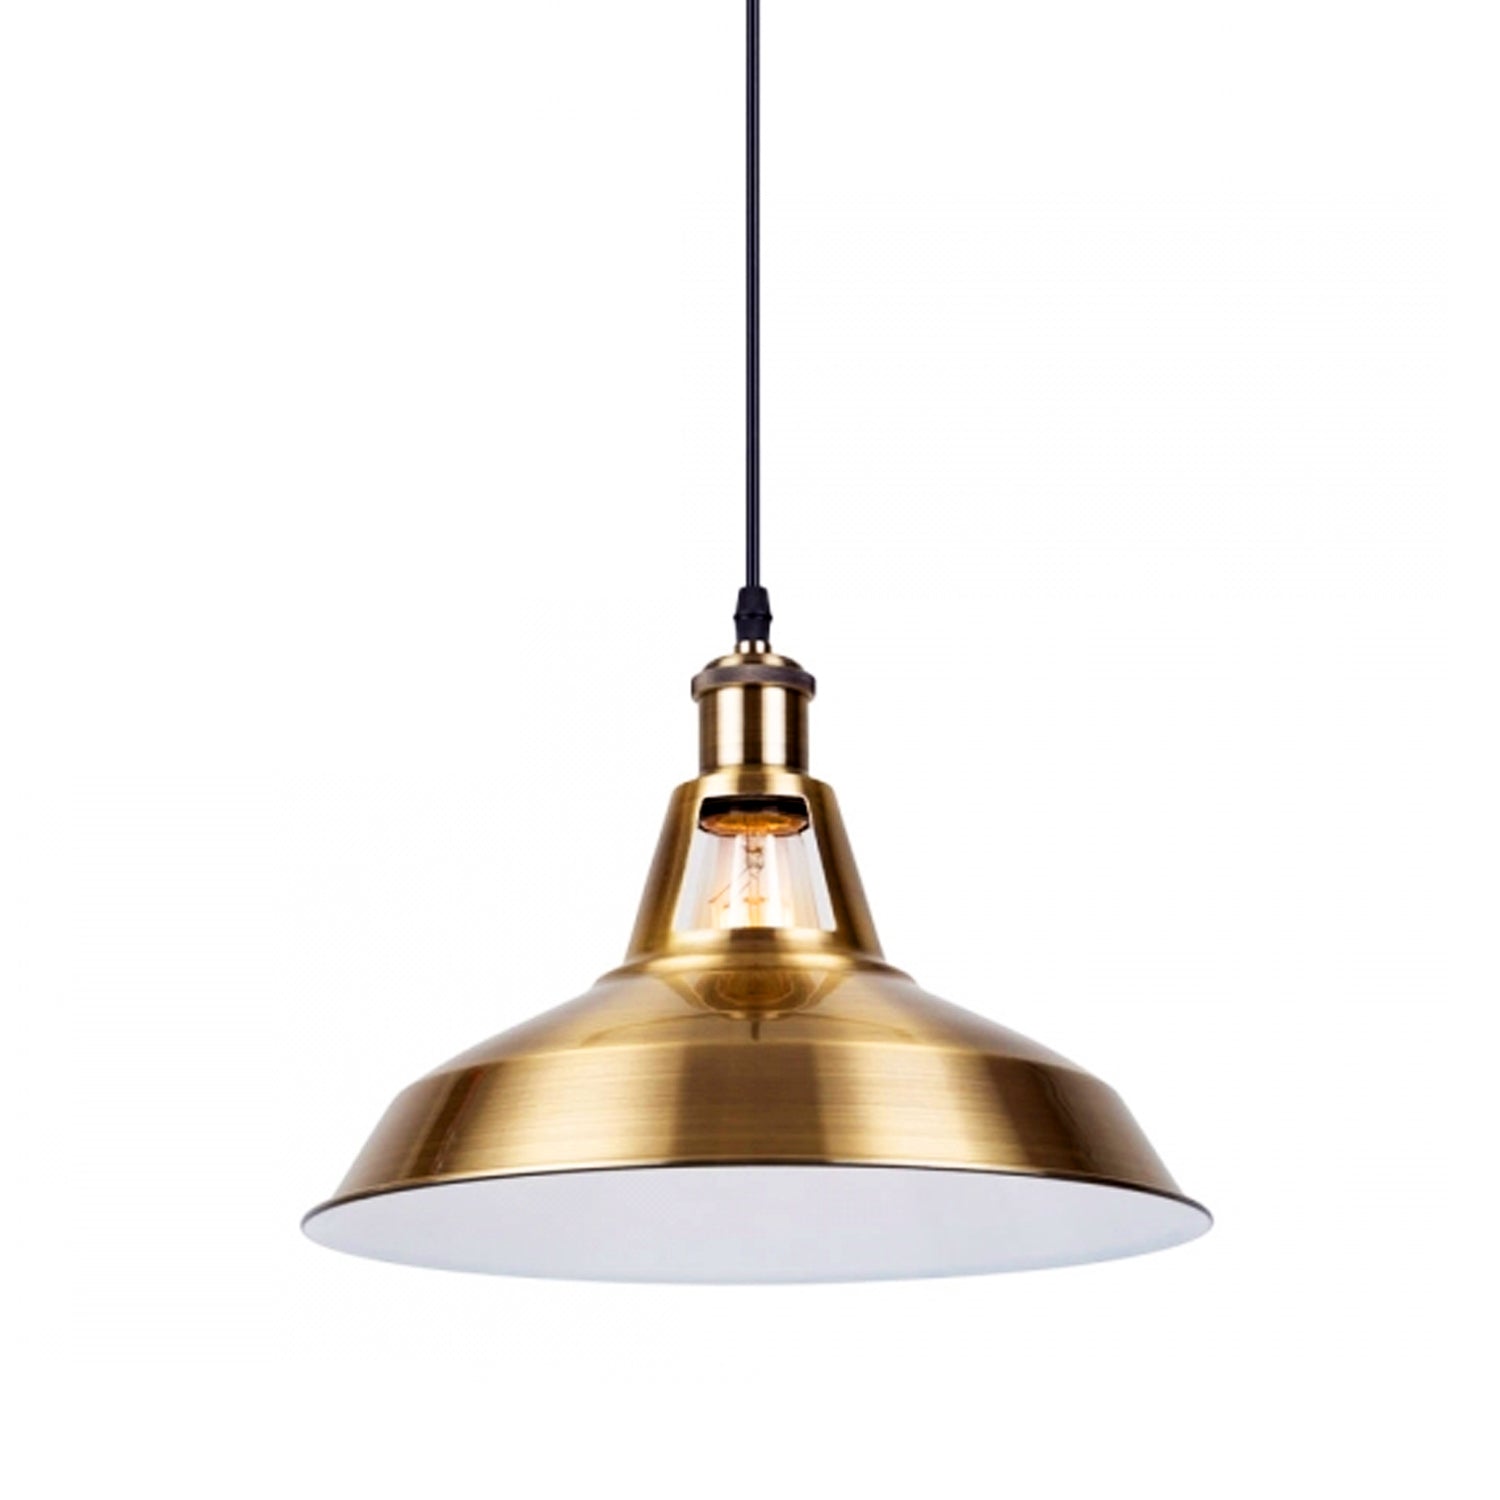 Yellow Brass Industrial Metal Ceiling Pendant Light Shade Modern Hanging Retro Light